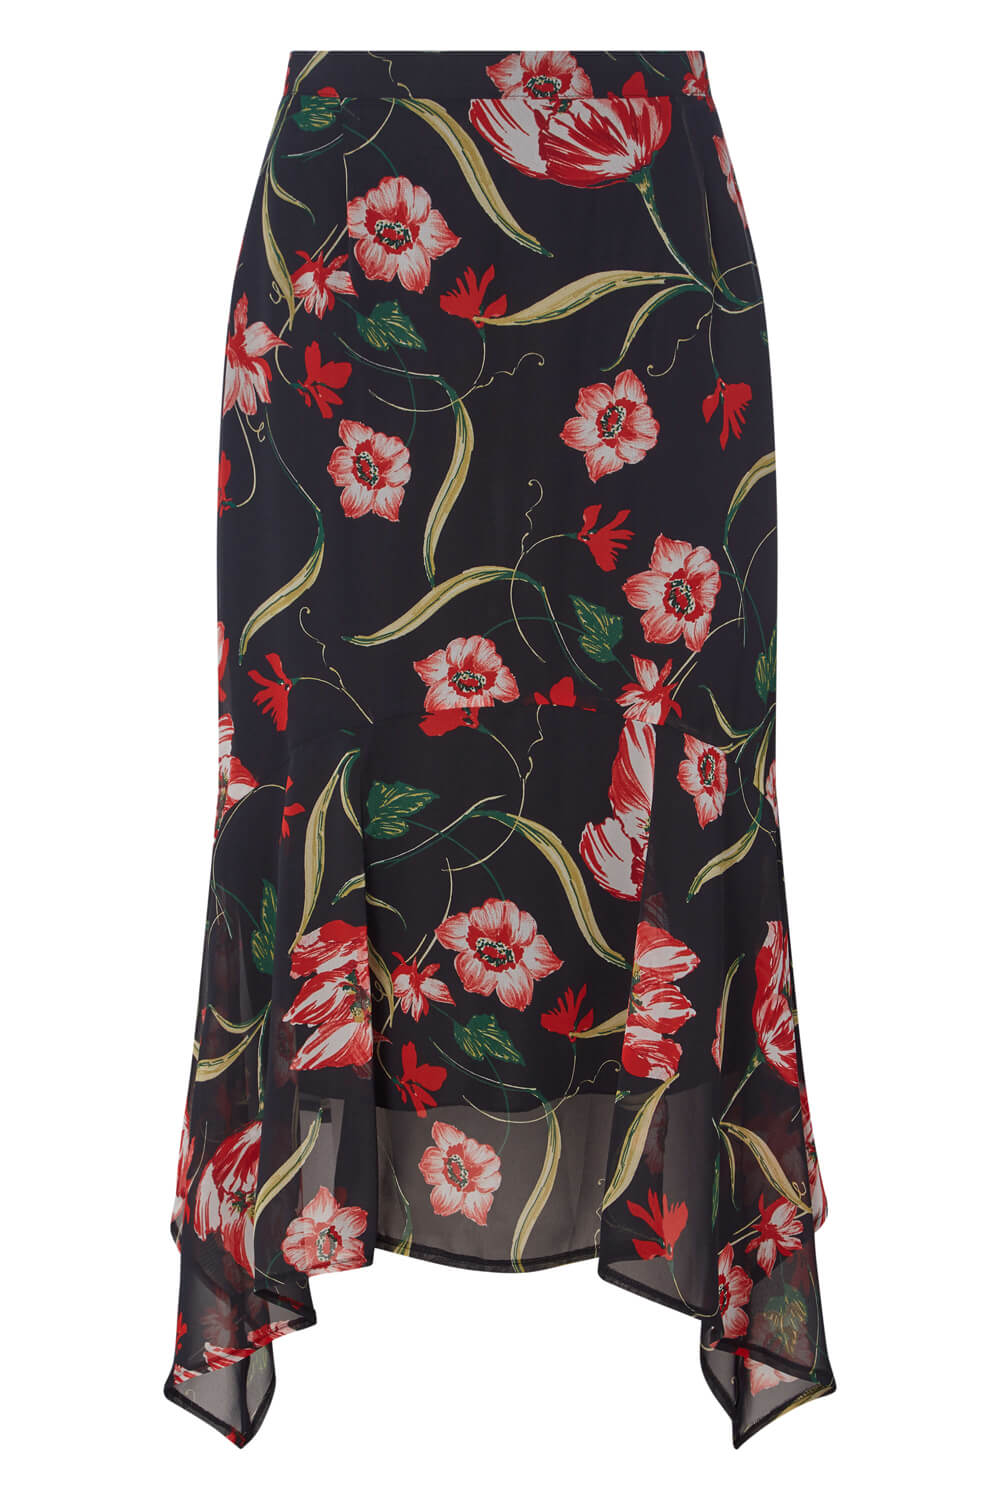 Black Floral Chiffon Skirt, Image 5 of 5